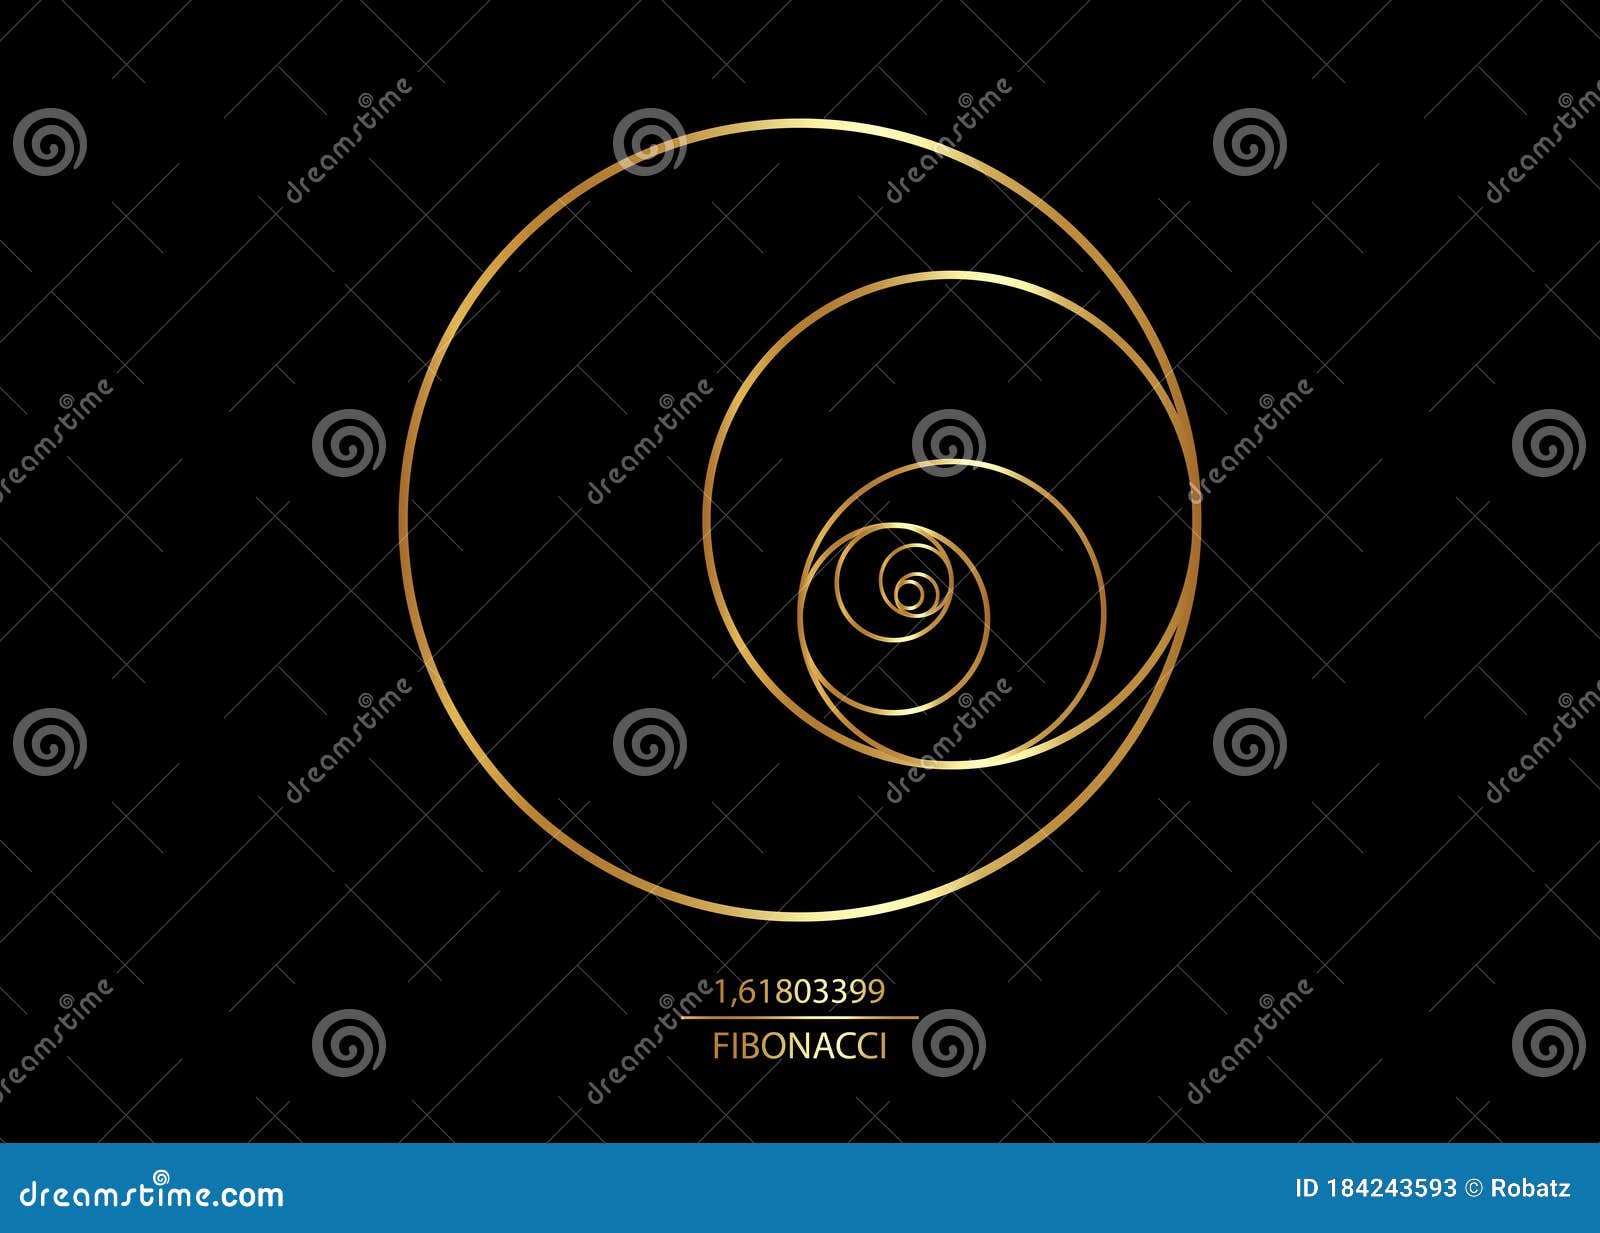 fibonacci sequence circle. golden ratio. geometric s spiral. circles in golden proportion. futuristic minimalist 